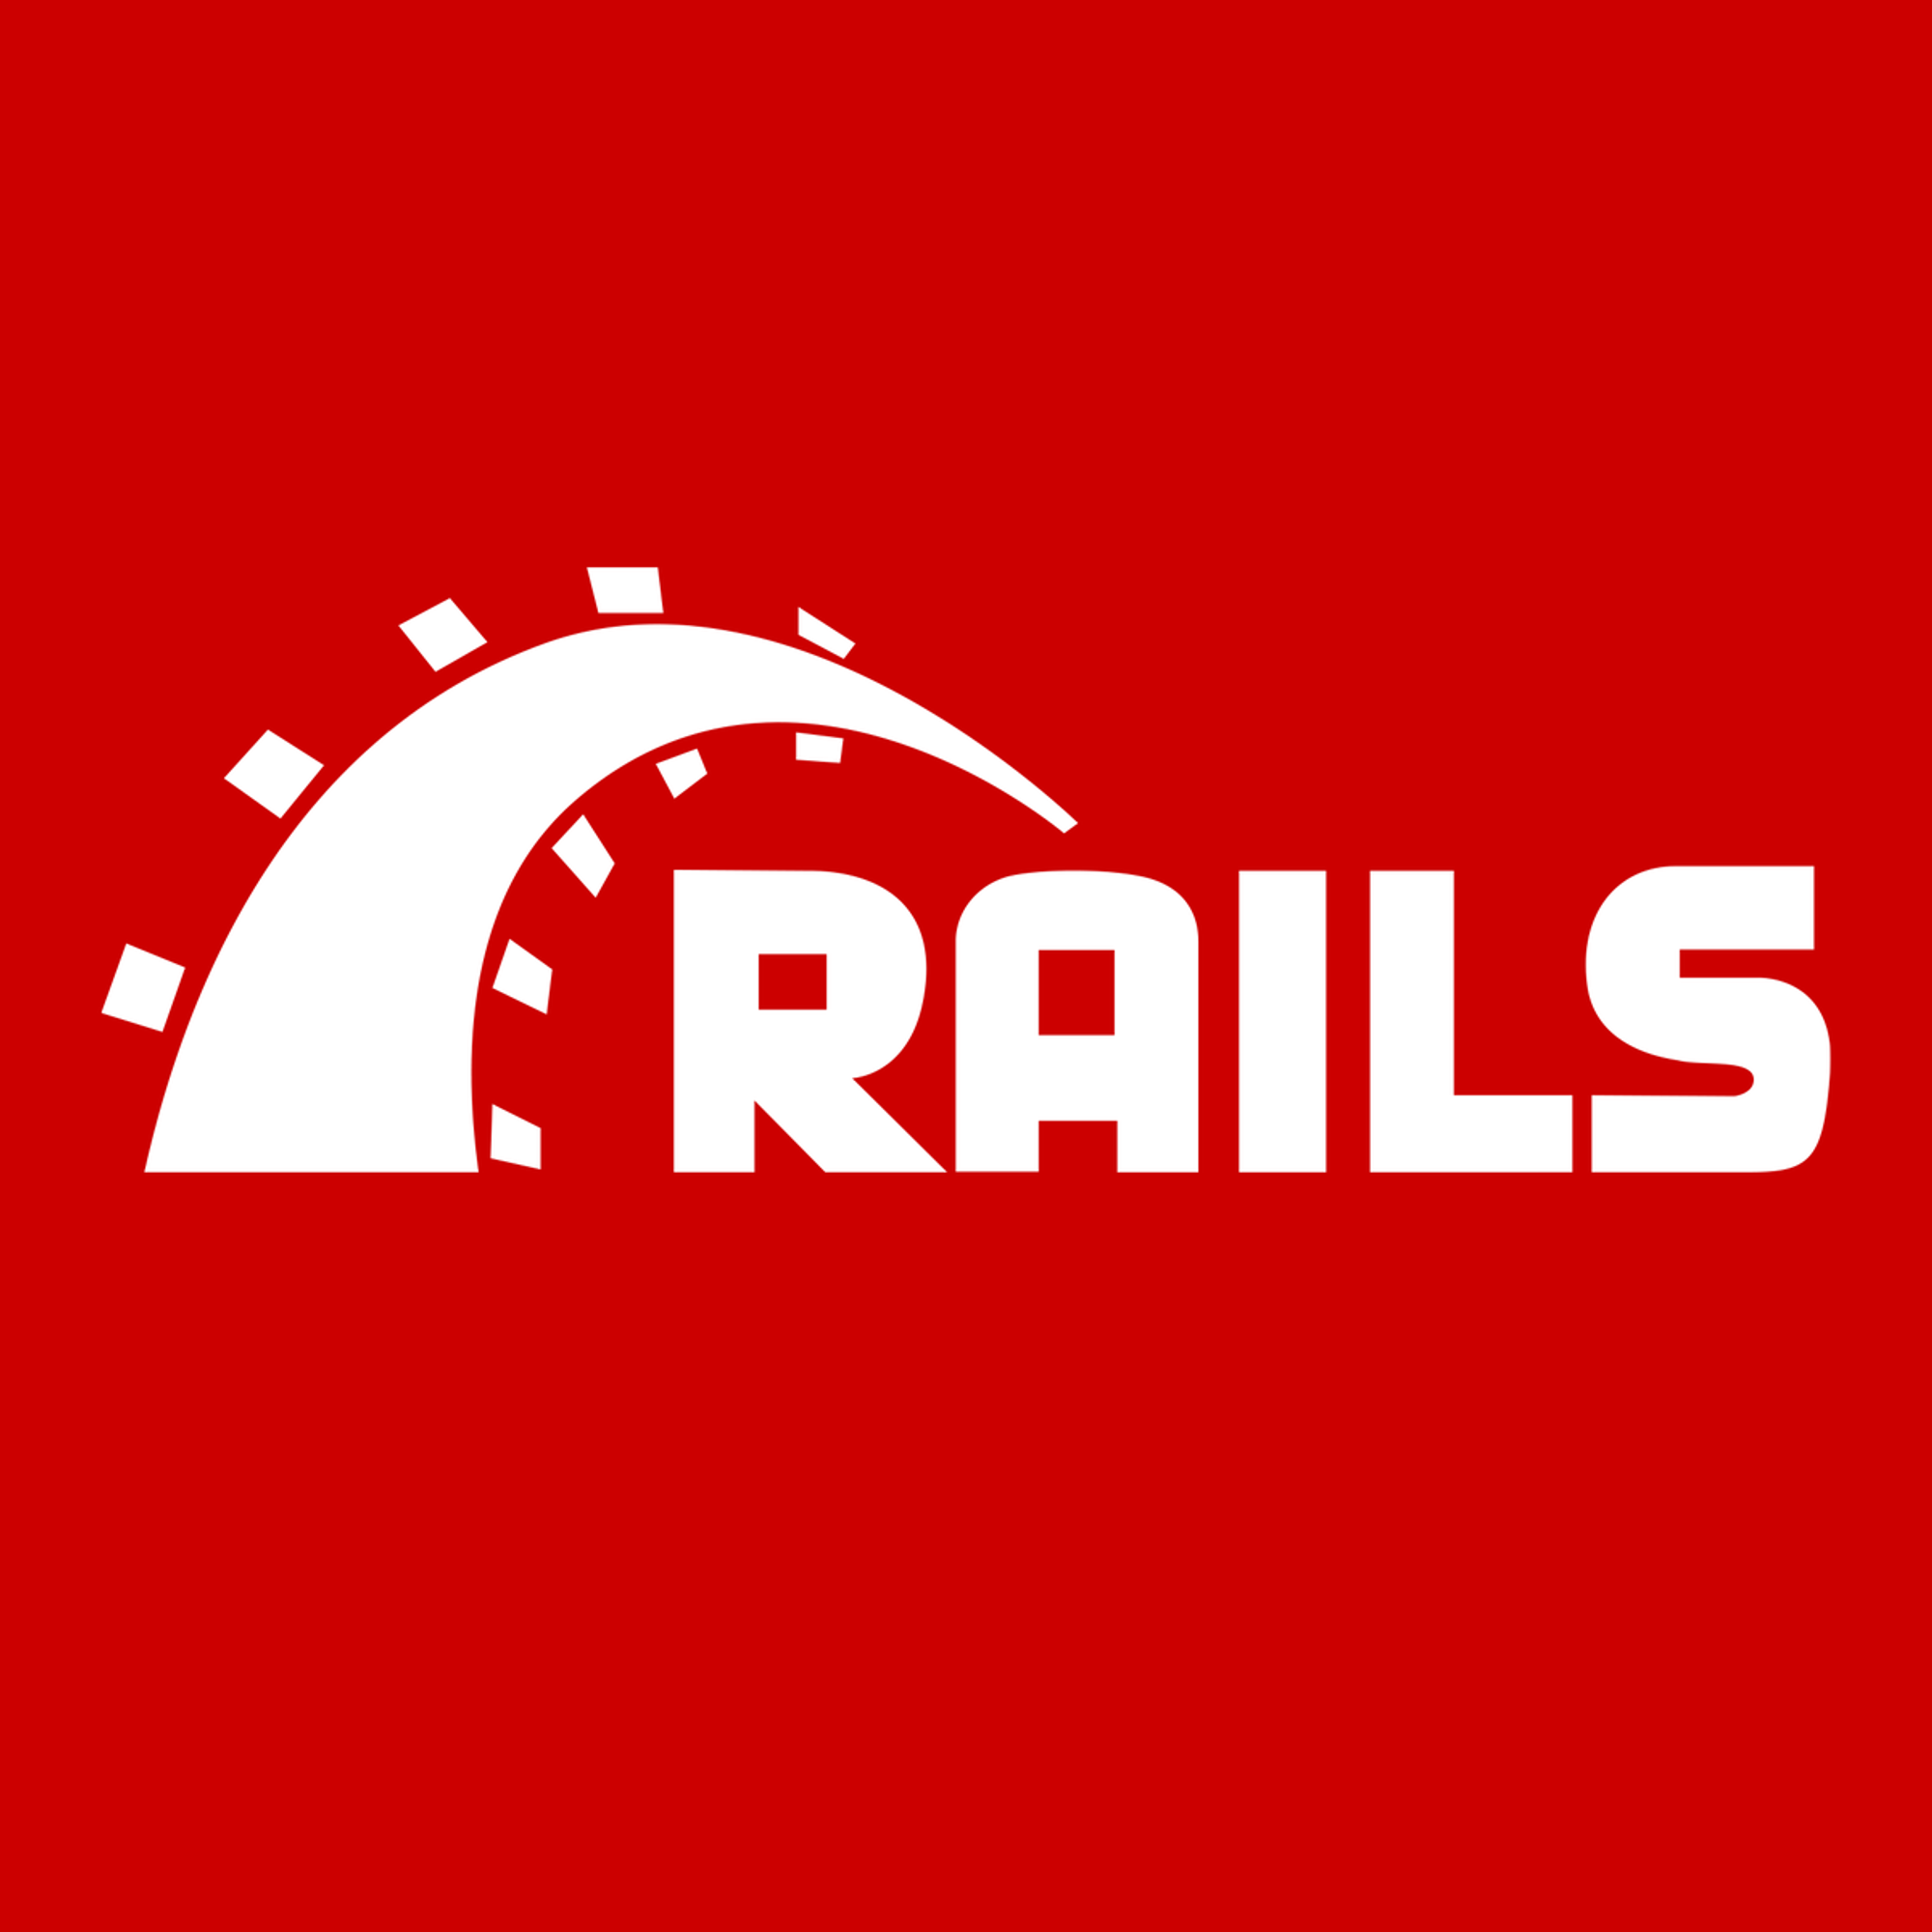 Ruby on Railsで、ある時間より早い場合だけ切り上げる